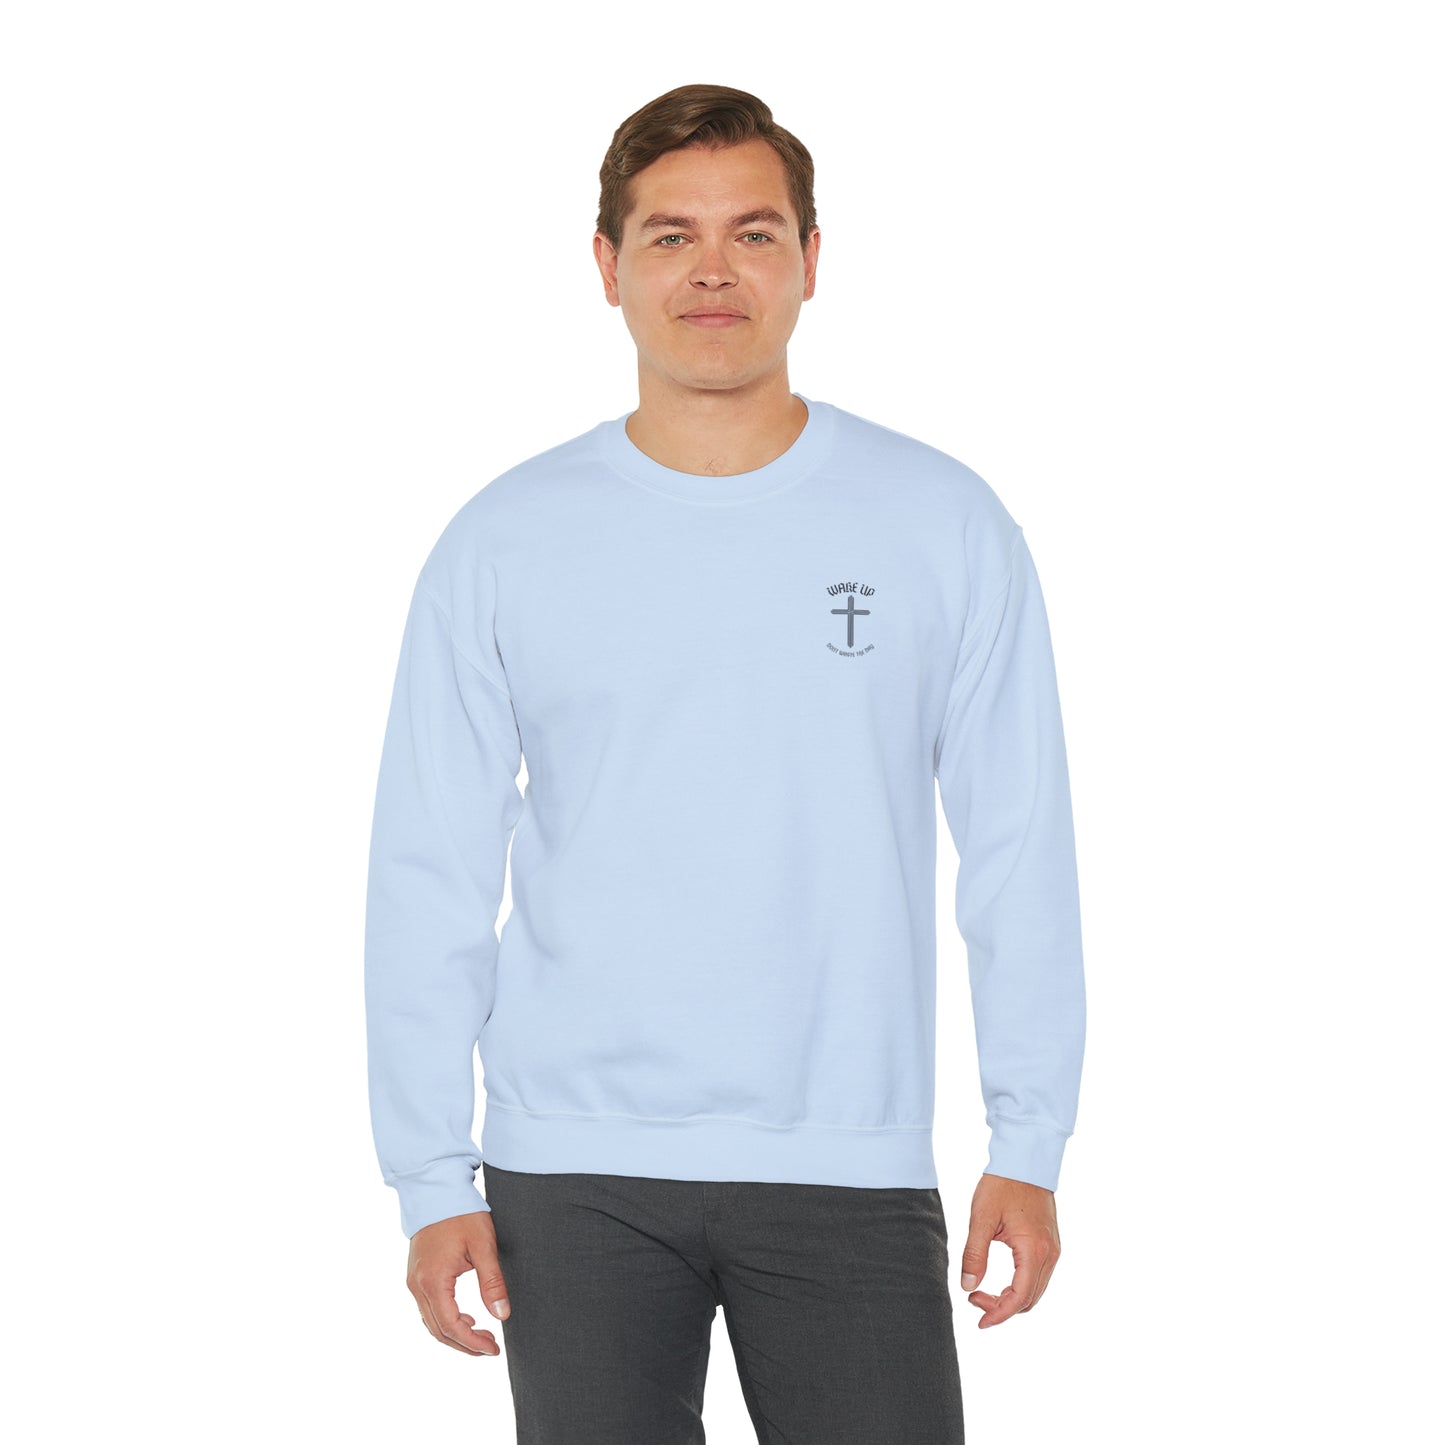 T.W.S.Y.F Crewneck Sweatshirt